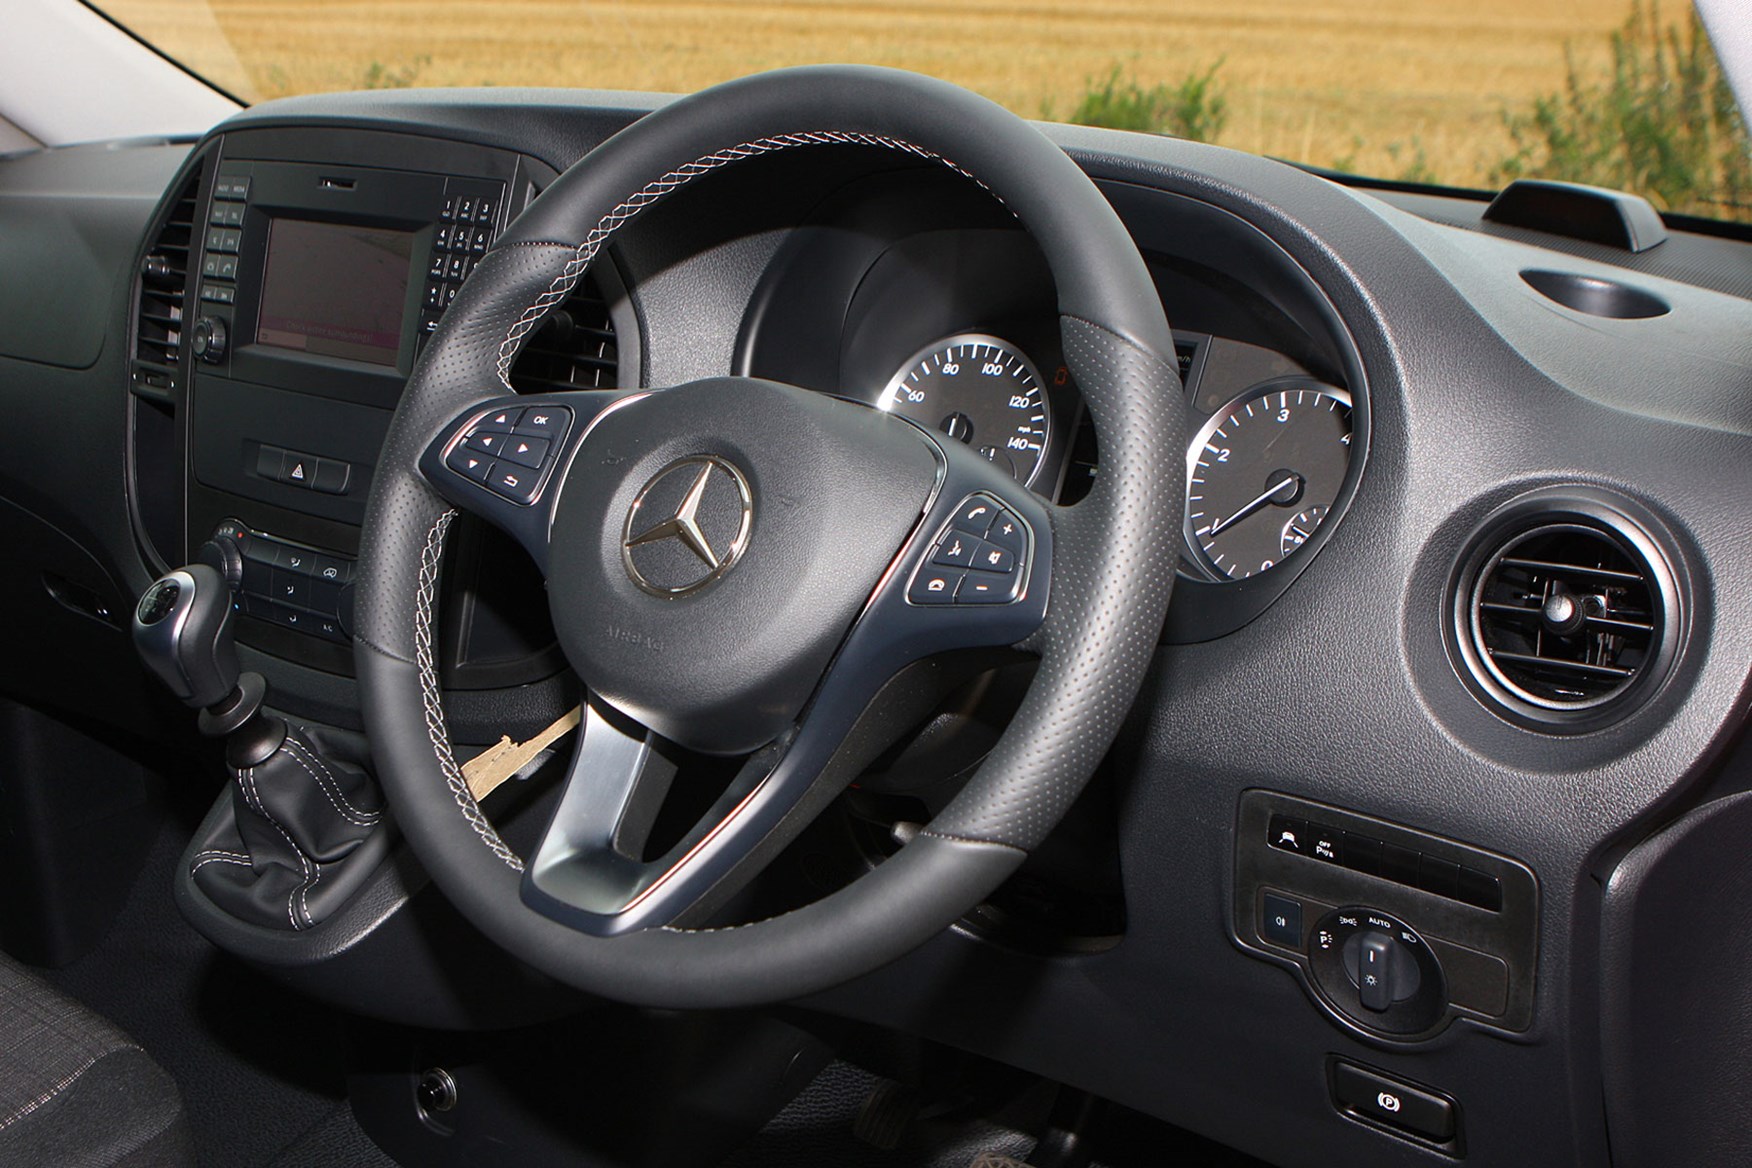 Mercedes-Benz Vito 111CDi Long review - cab interior, steering wheel, dashboard